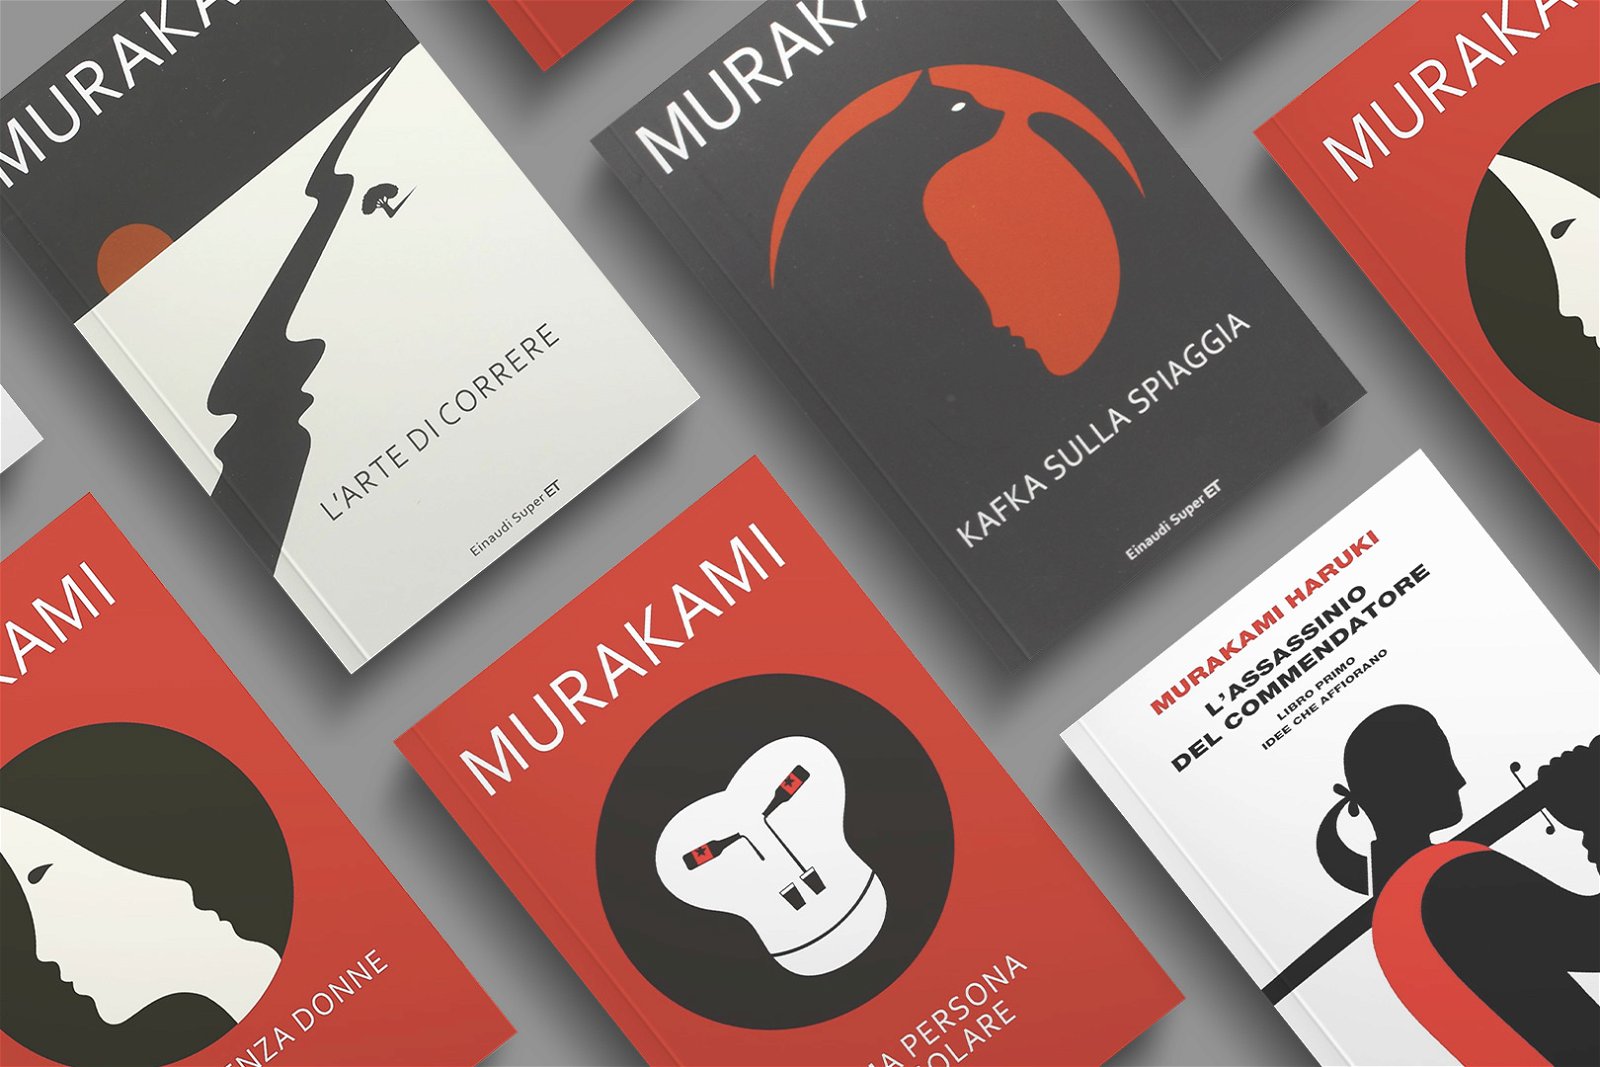 I libri di Haruki Murakami tra realtà e immaginazione.